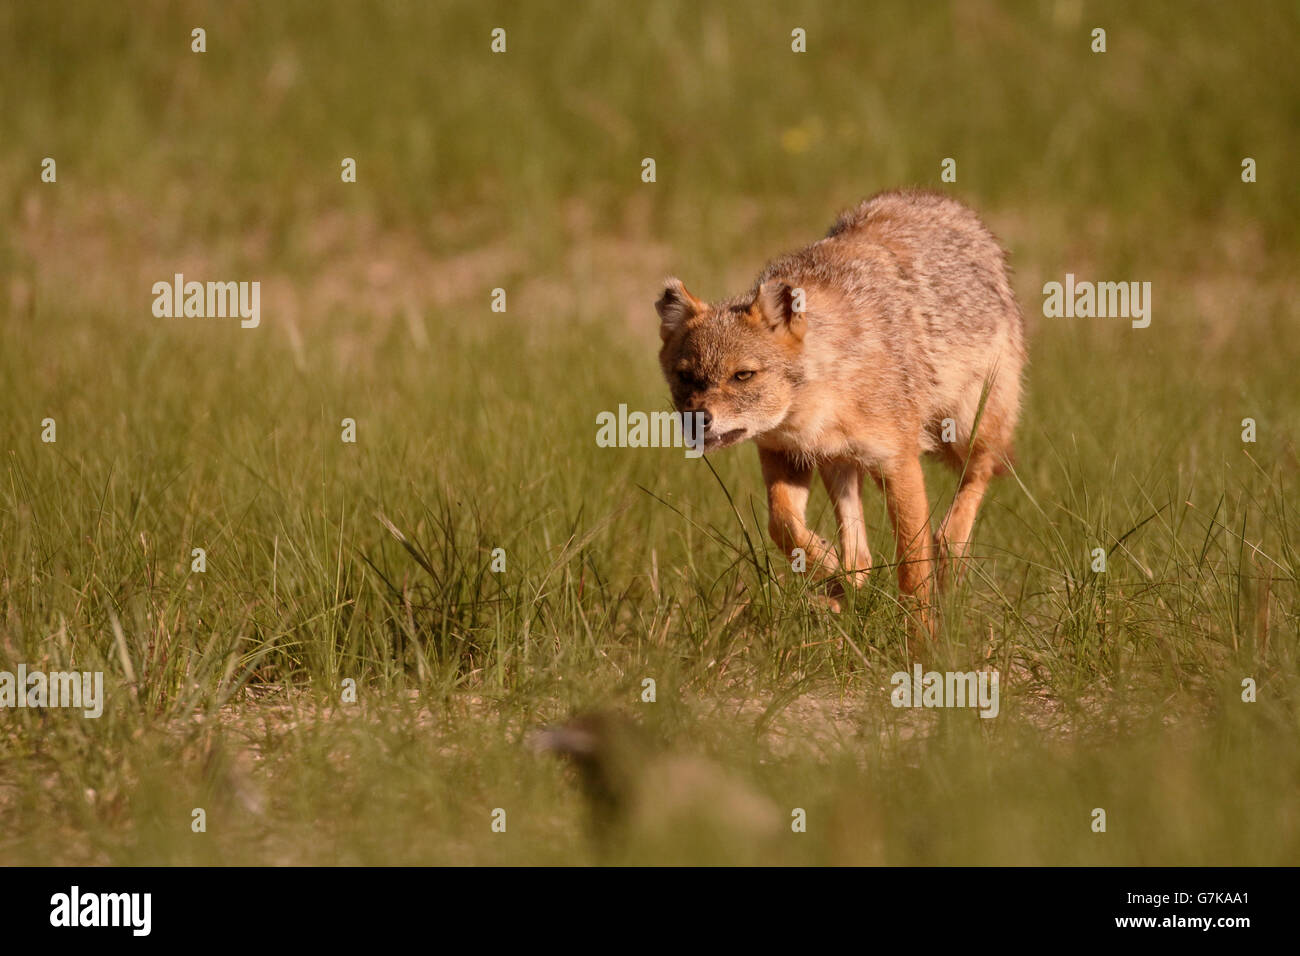 European jackal, Canis aureus moreoticus, Single mammal on grass, Romania, June 2016 Stock Photo